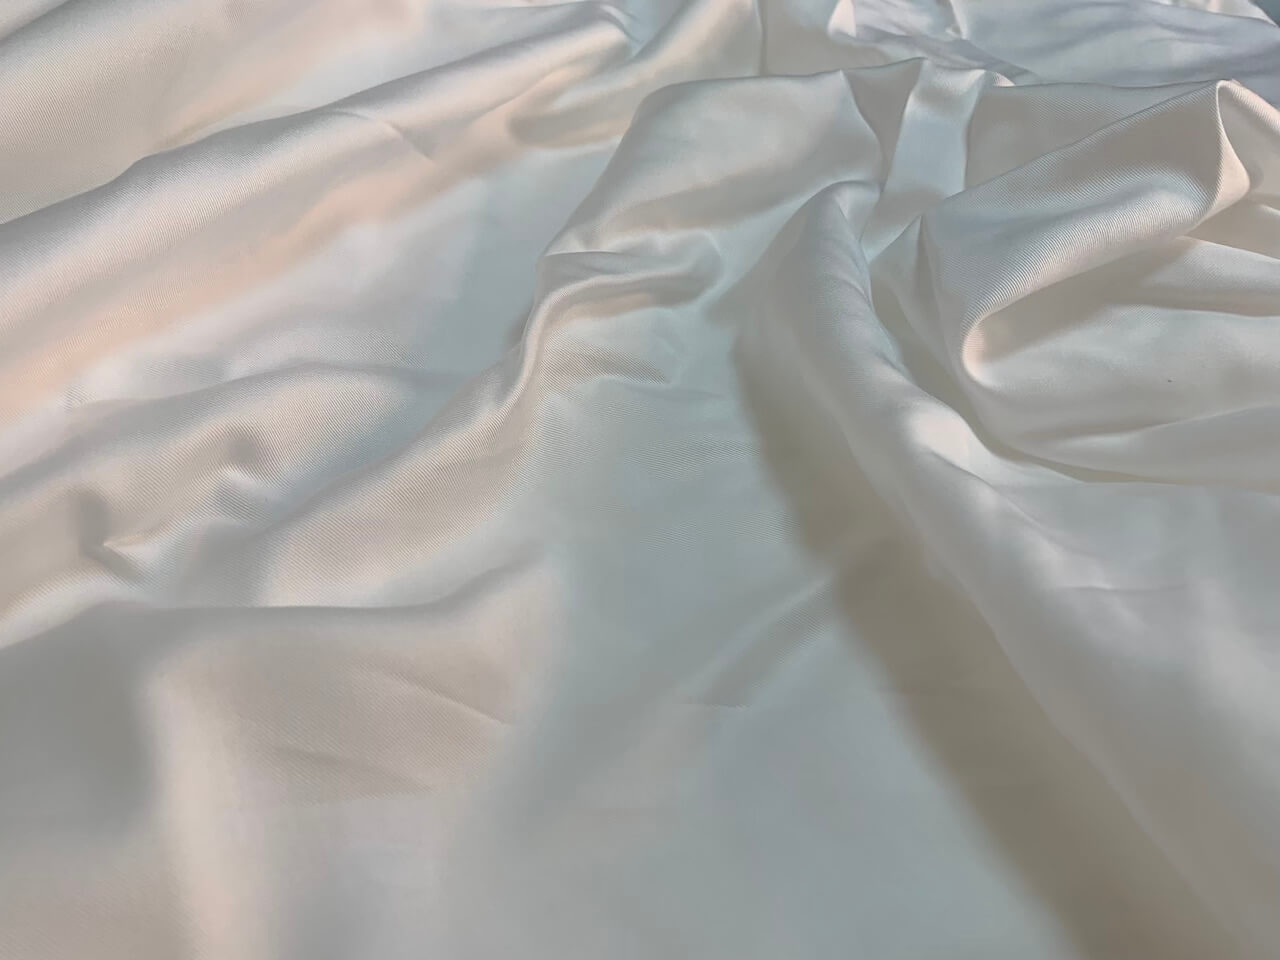 koala-mattress-bed-sheets-3